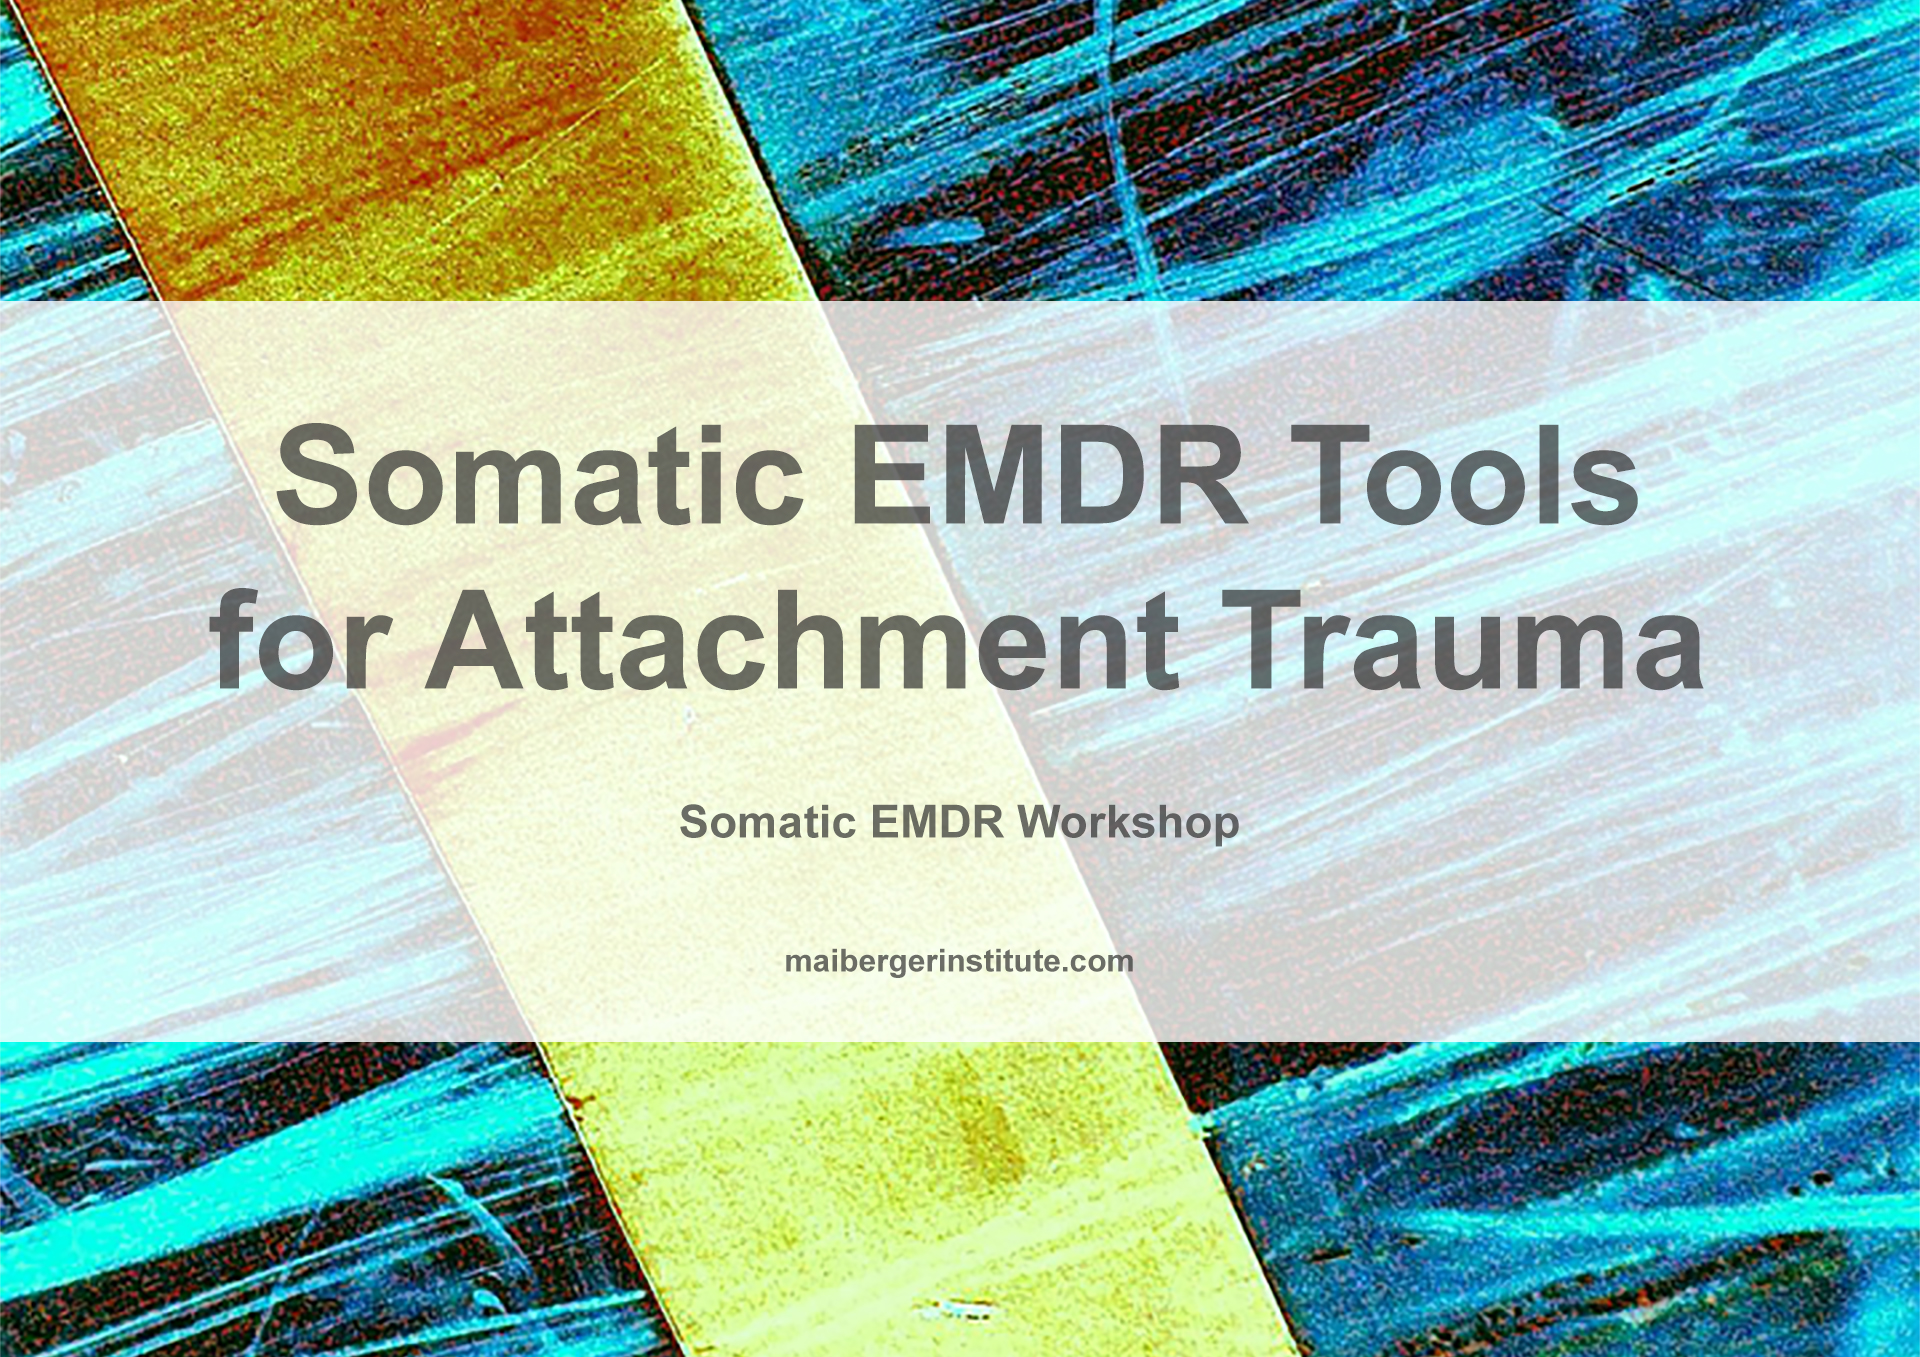 Somatic EMDR Workshops - Somatic EMDR Tools for Attachment Trauma